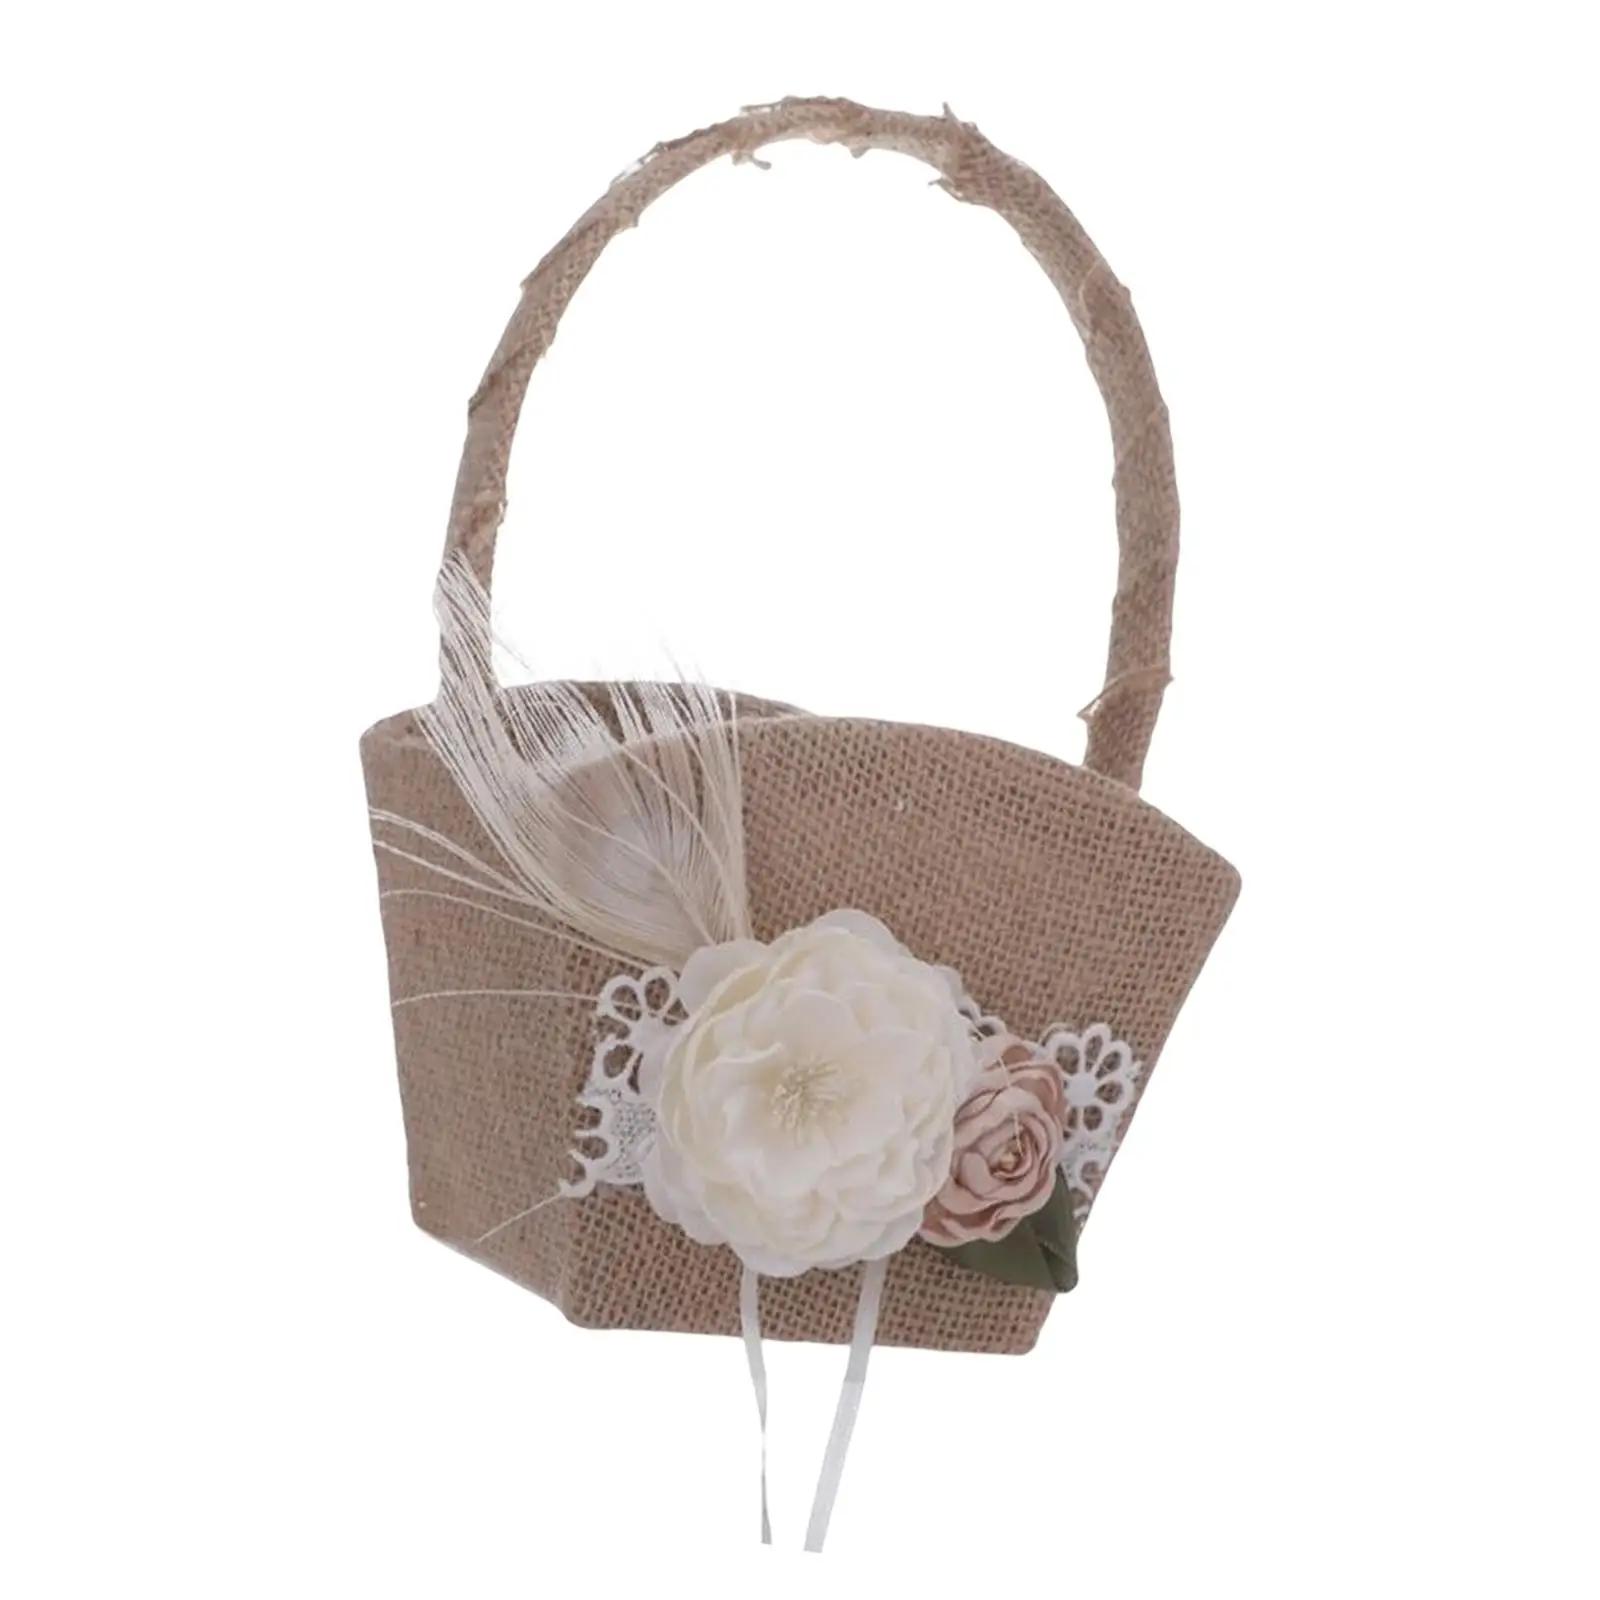 Flower Girl Basket Celebration Ribbon Decor Candy Gift Basket Pearl Handle for Parties